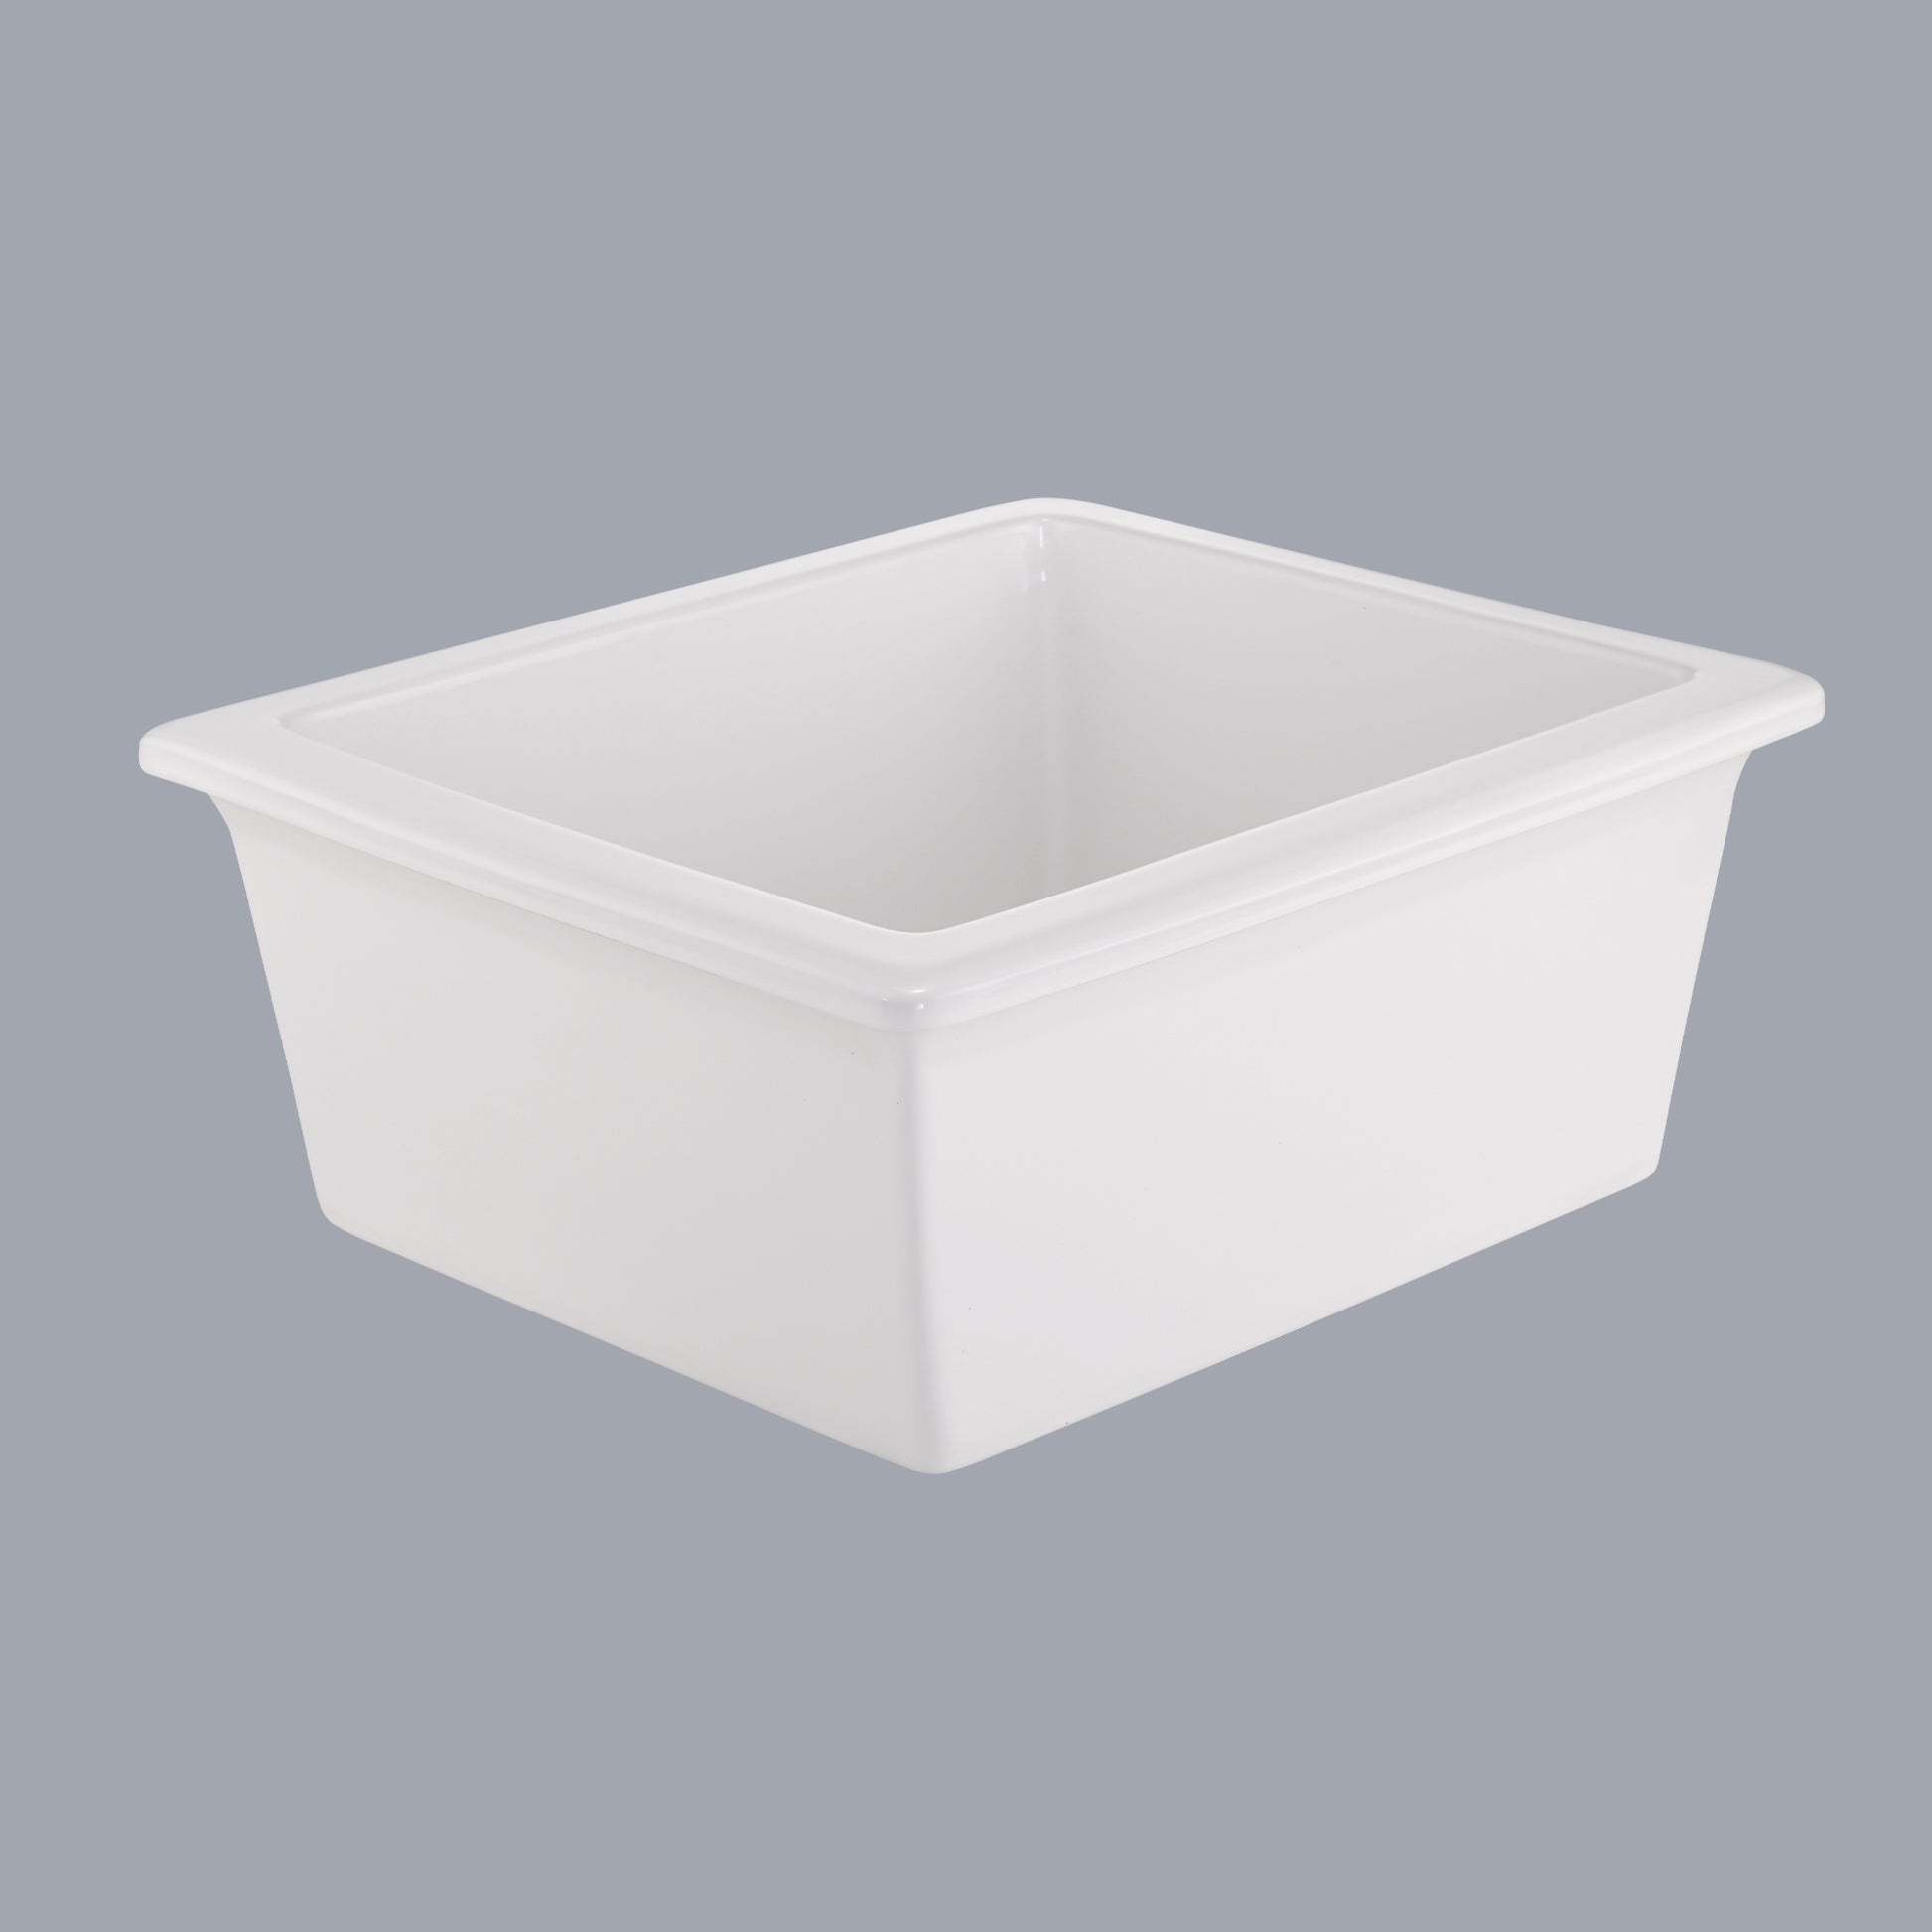 21"L X 18.5" W White Ceramic Single Bowl Kitchen